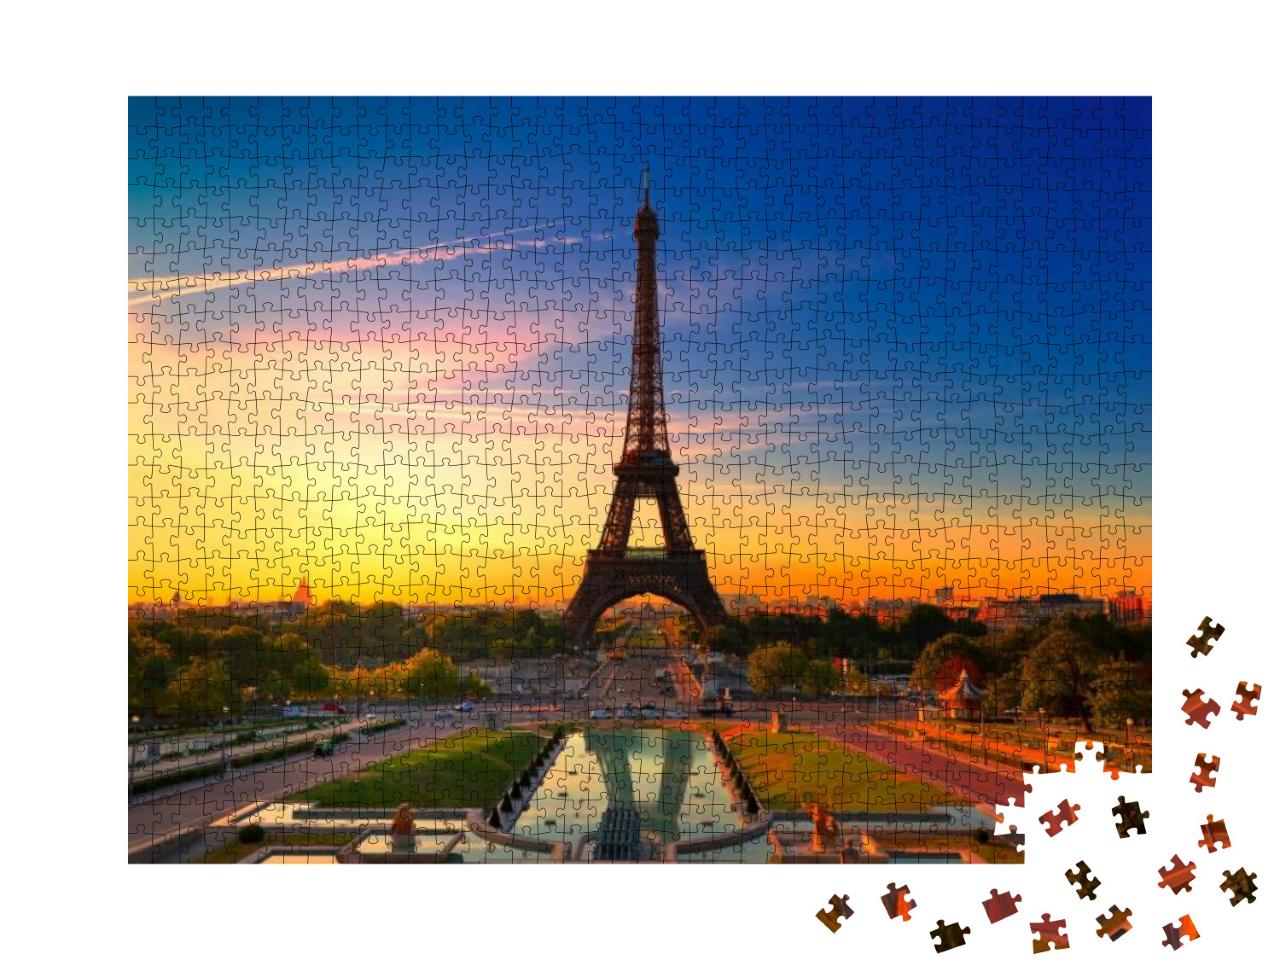 Puzzle 1000 Teile „Sonnenaufgang in Paris“